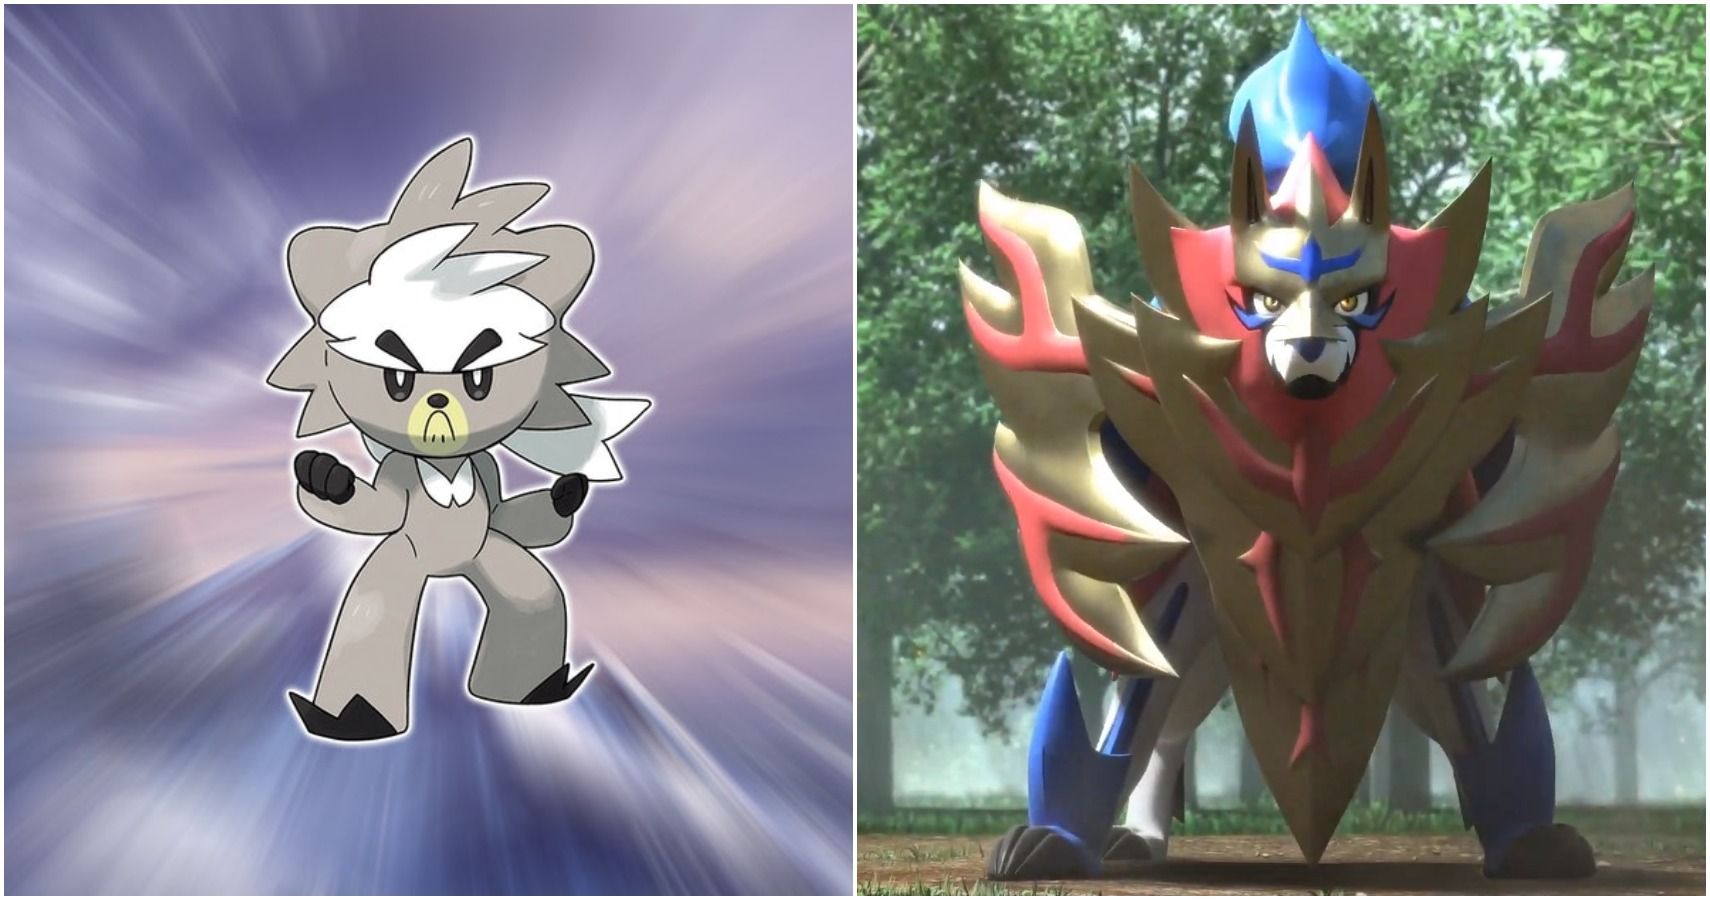 Pokemon Sword and Shield Legendaries: Zacian and Zamazenta are the